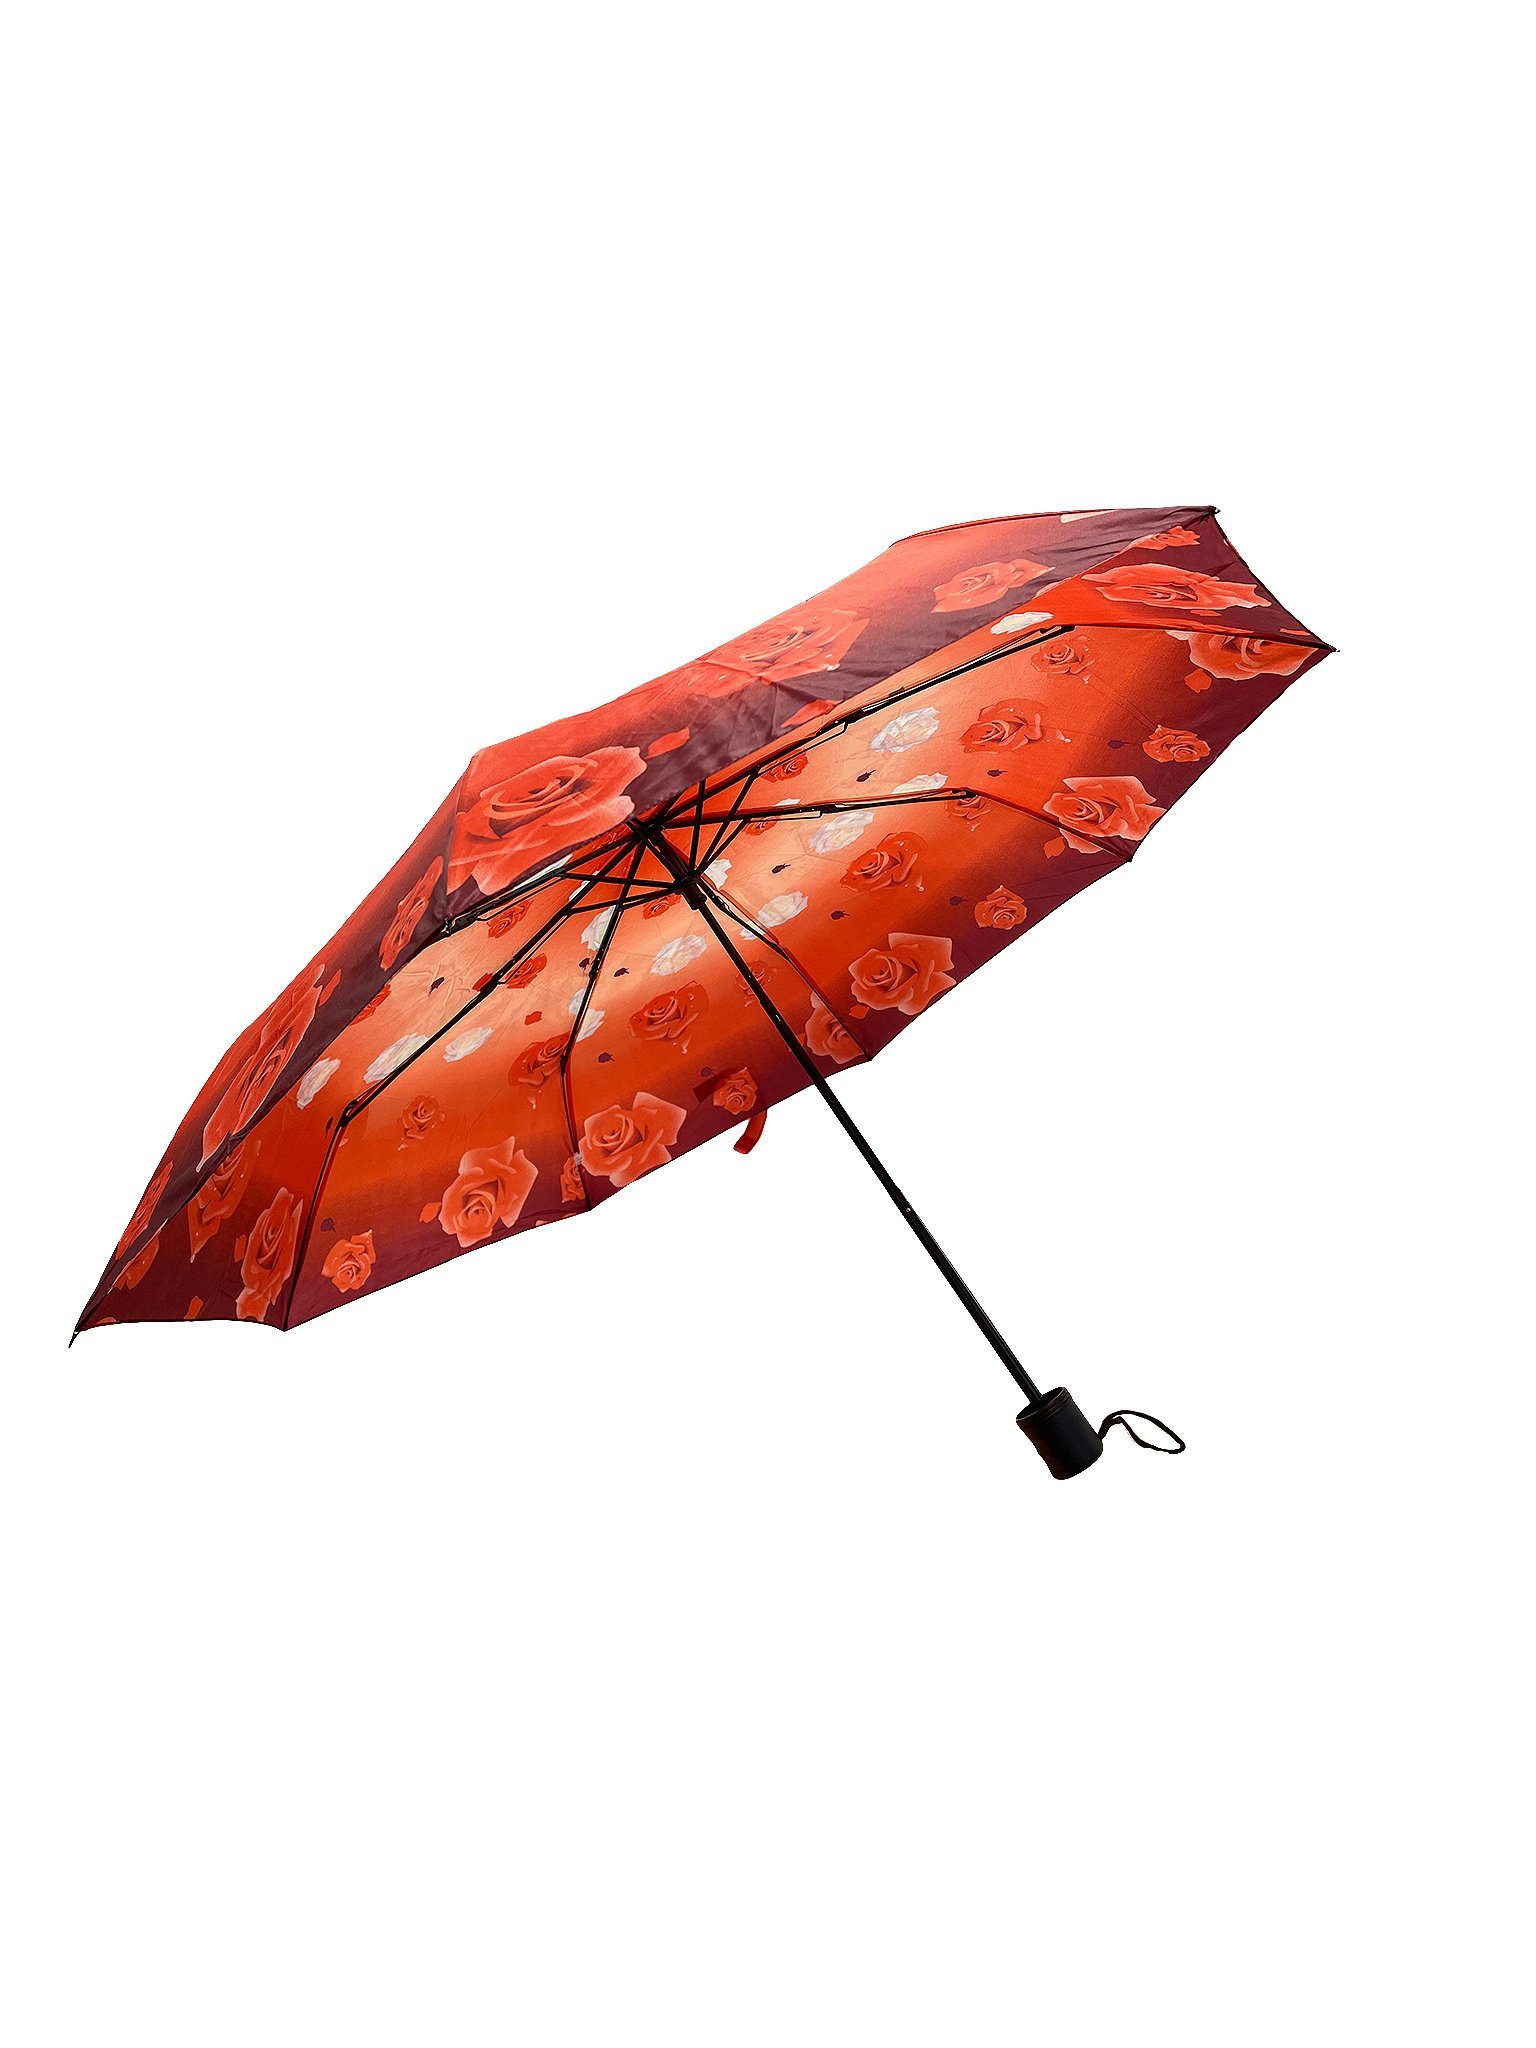 ANELY Taschenregenschirm in Taschenschirm, 6746 Kleiner Regenschirm Gemustert Paris Rot